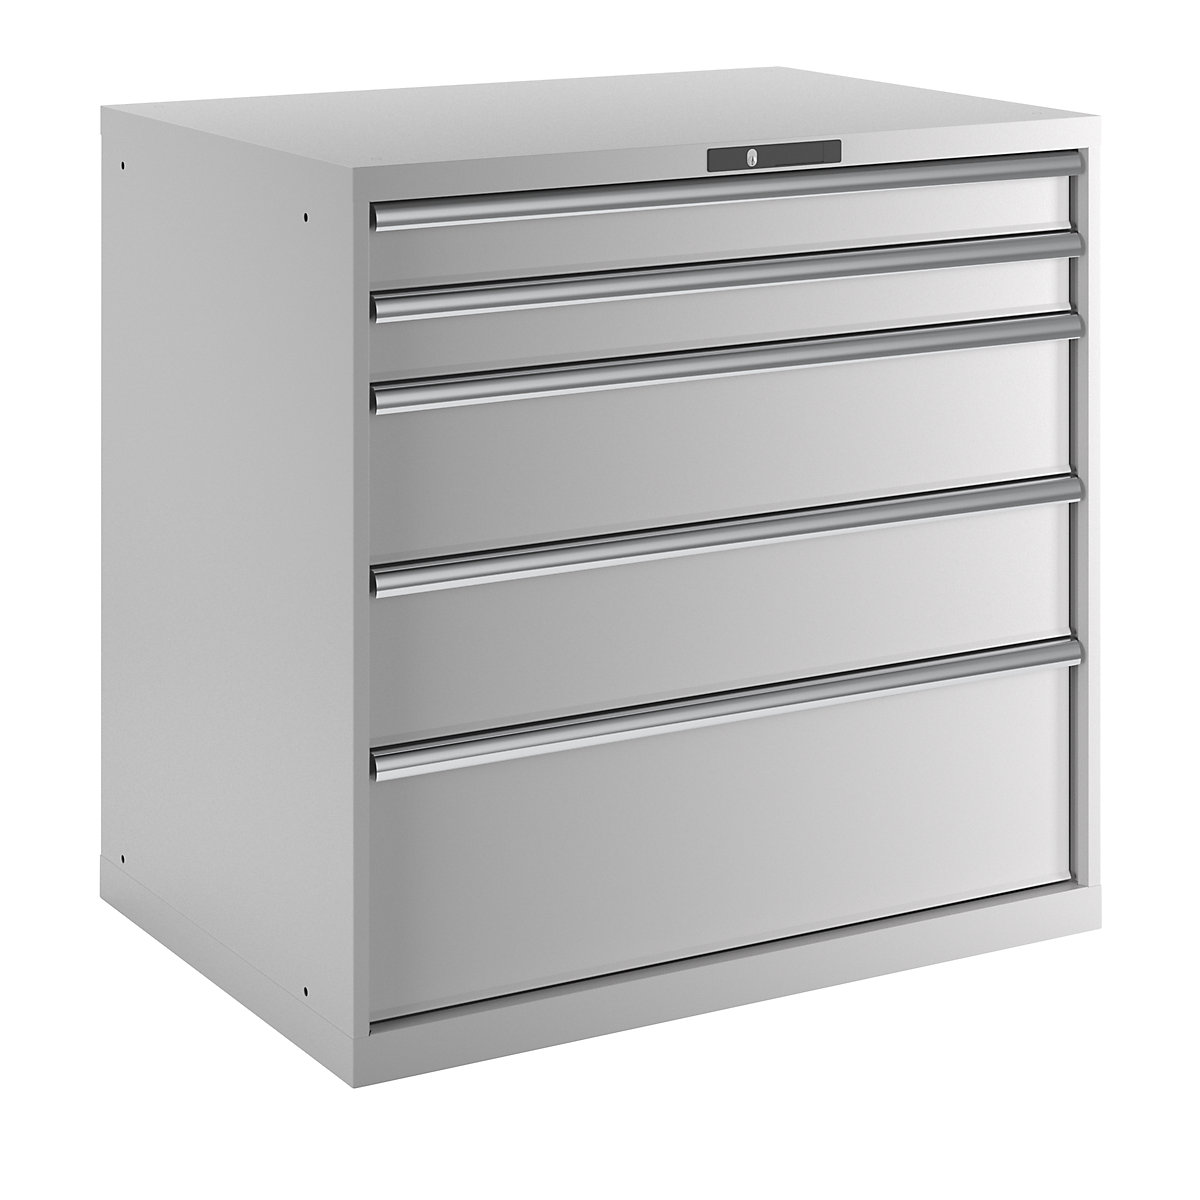 Drawer cupboard, 5 drawers – LISTA